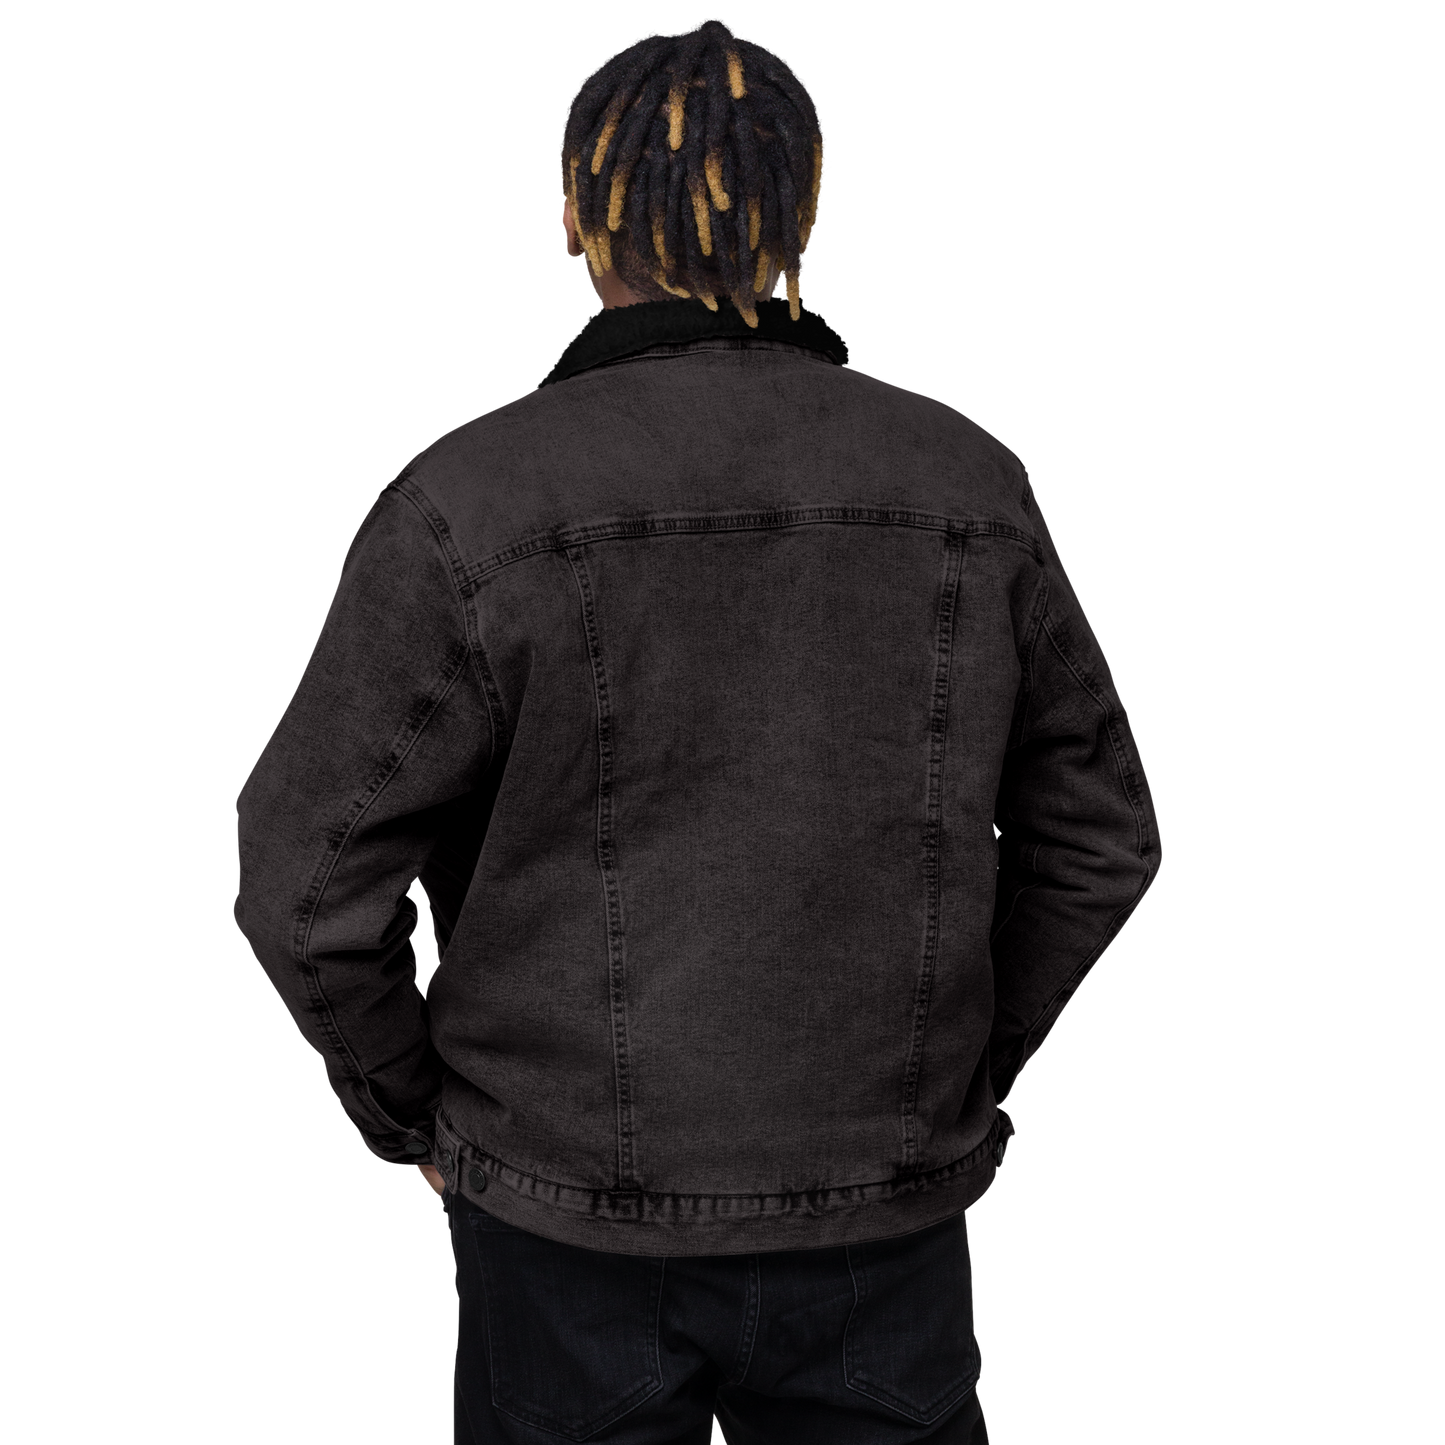 YHM Designs - YEG Edmonton Denim Sherpa Jacket - Crossed-X Design with Airport Code and Vintage Propliner - Black & White Embroidery - Image 09